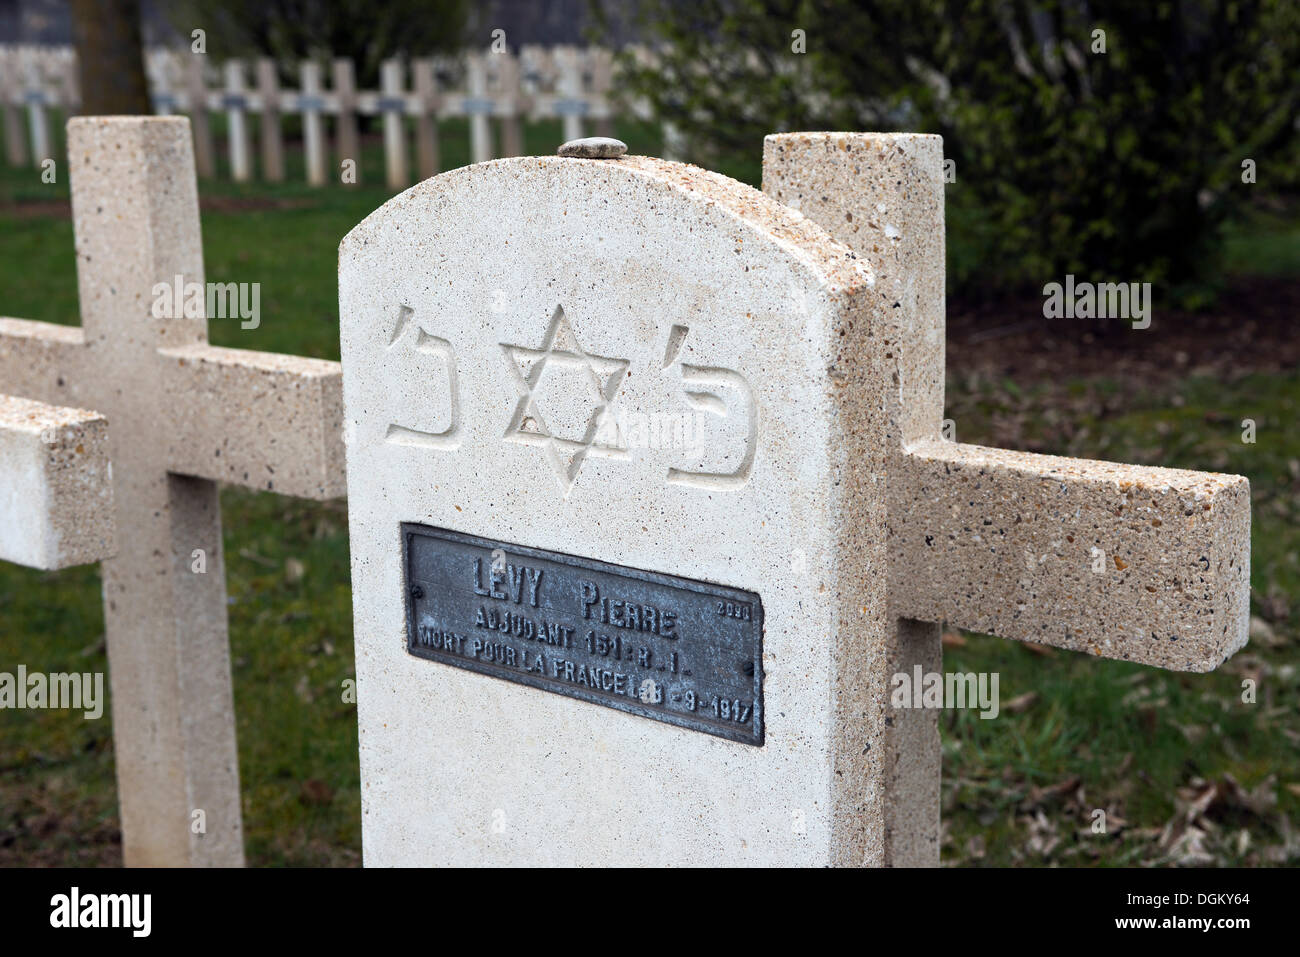 Jewish headstone with name plate, military cemetery, Battle of Verdun, First World War, Verdun, Lorraine, France, Europe Stock Photo